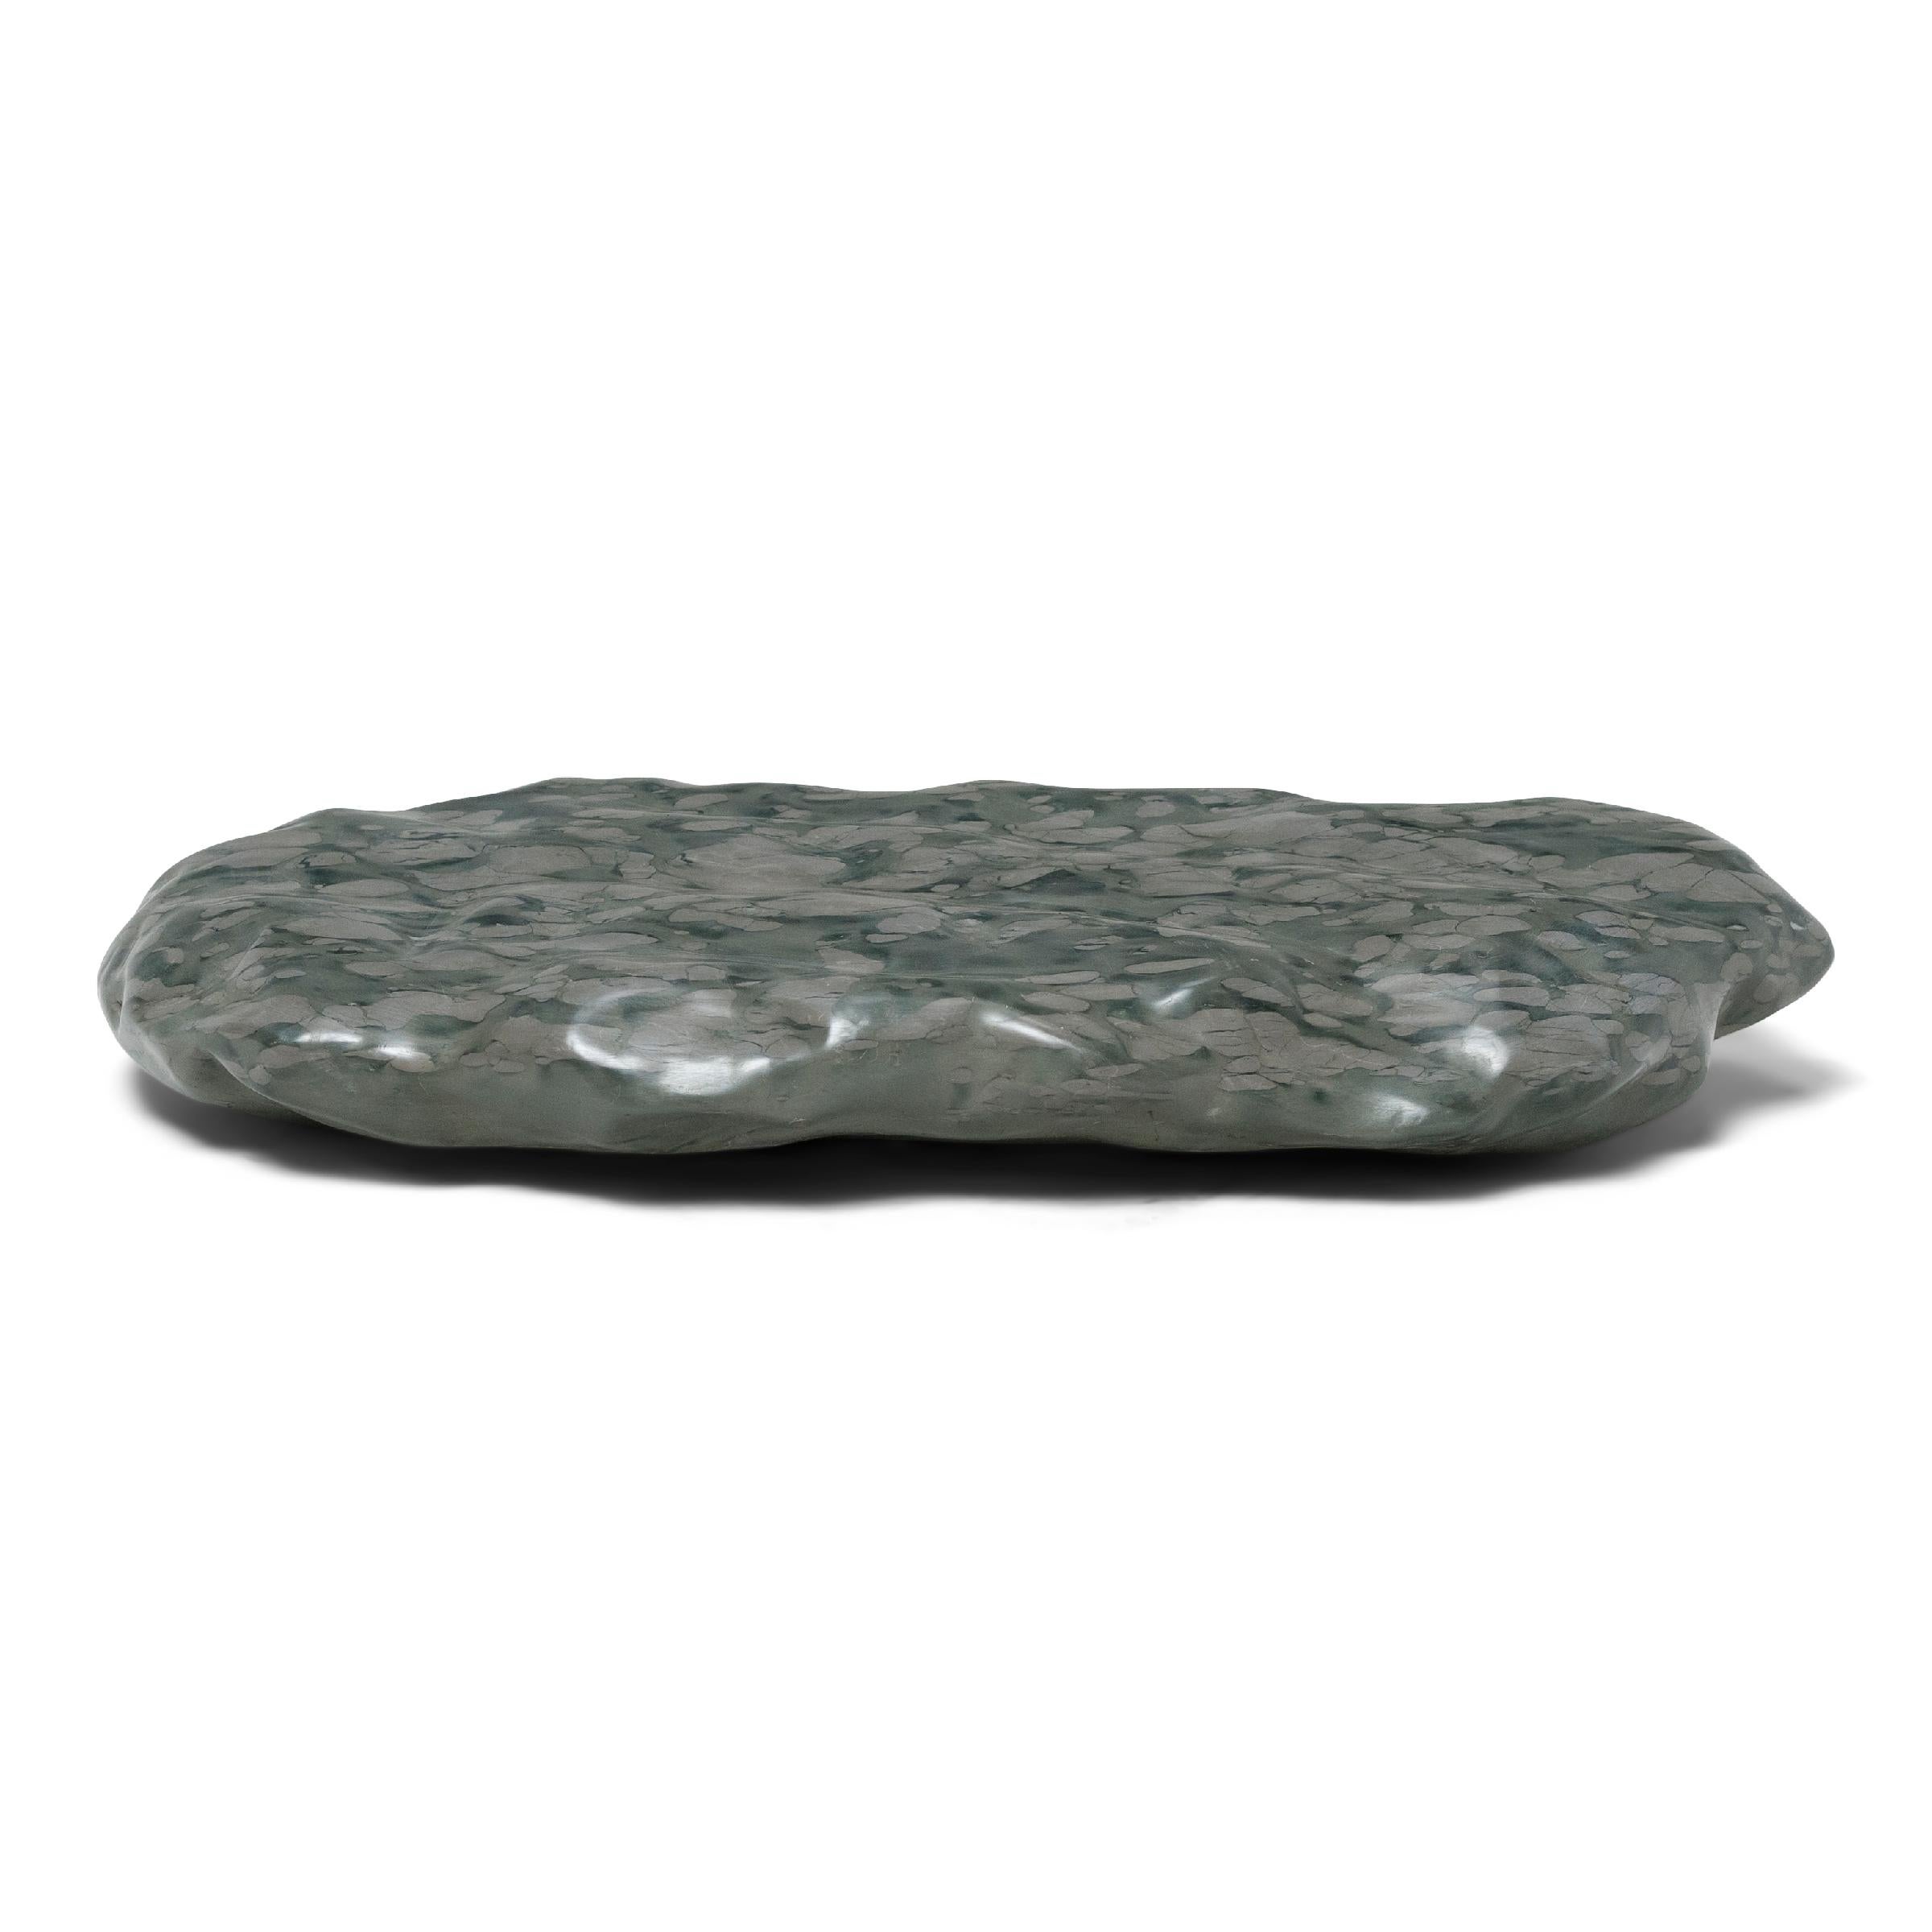 Organic Modern Chinese Zhenzhu Meditation Stone For Sale